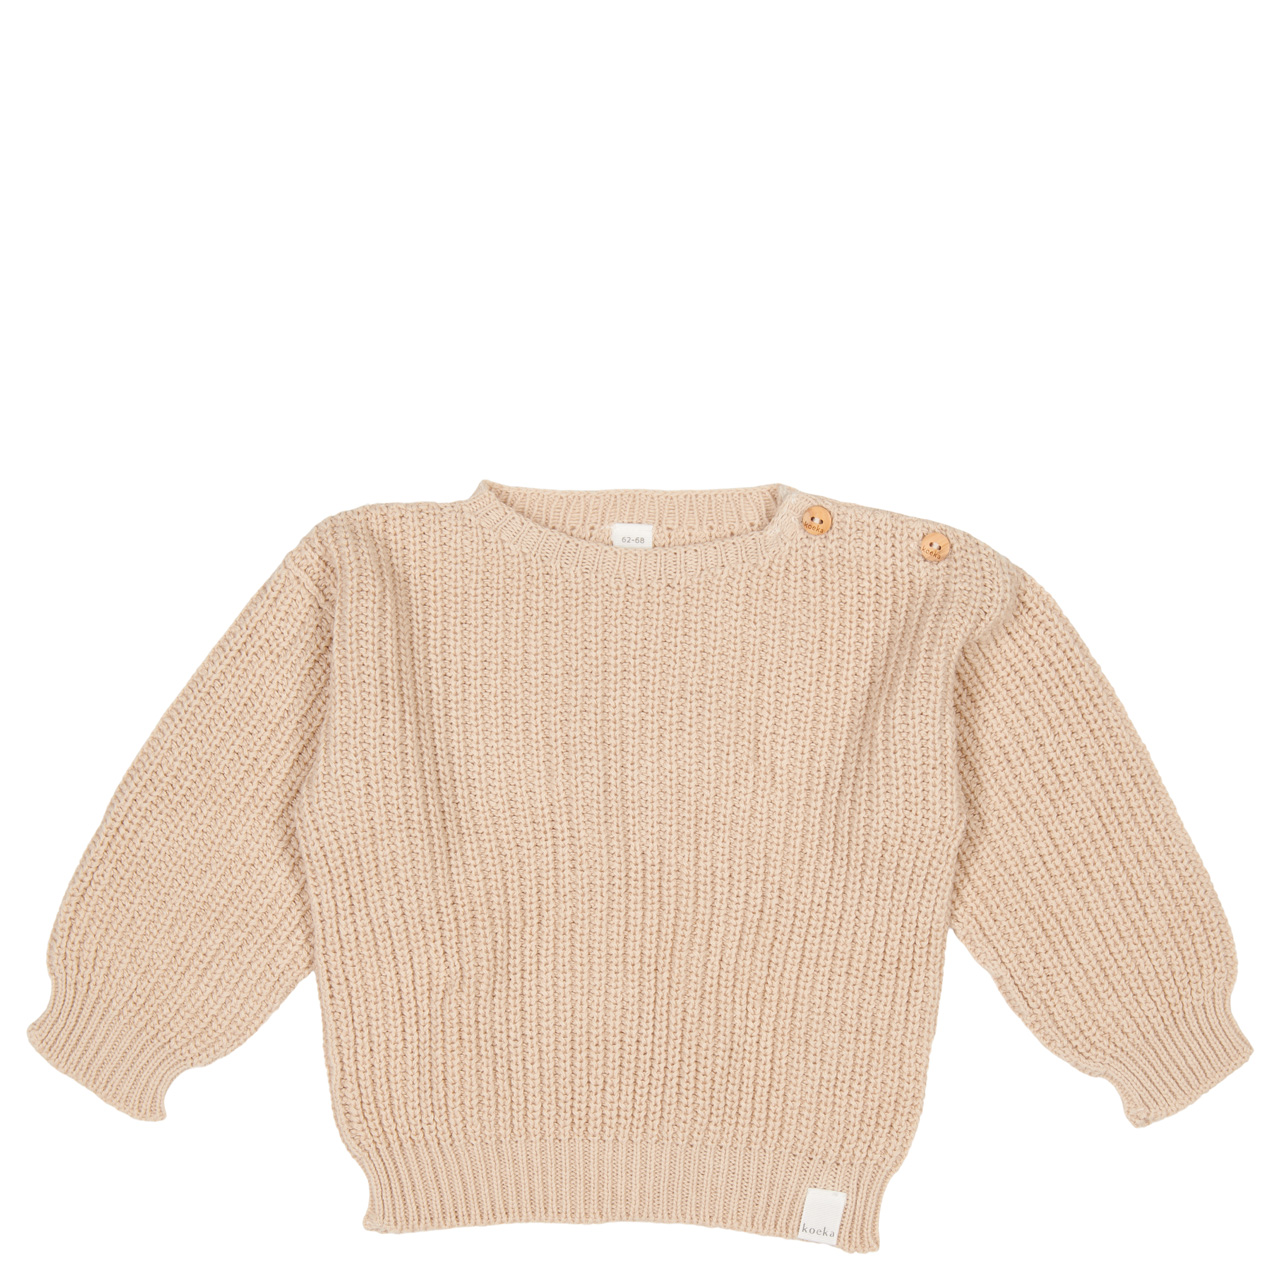 Baby sweater Dinan sand